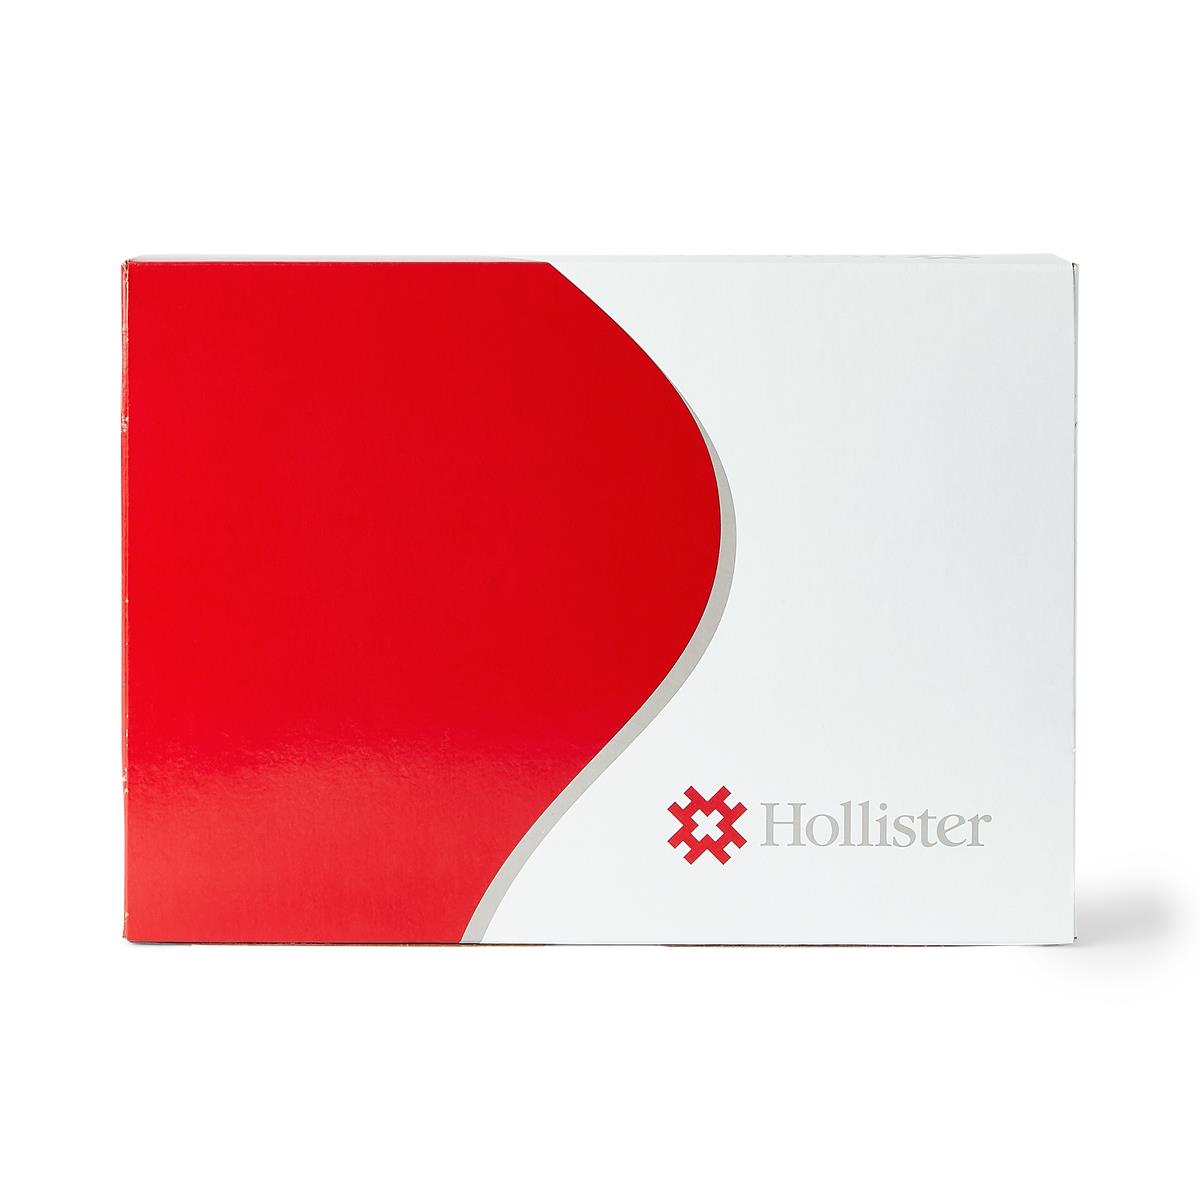 Hollister 8930 CeraPlus Premier™ One Piece Kits - Box of 10